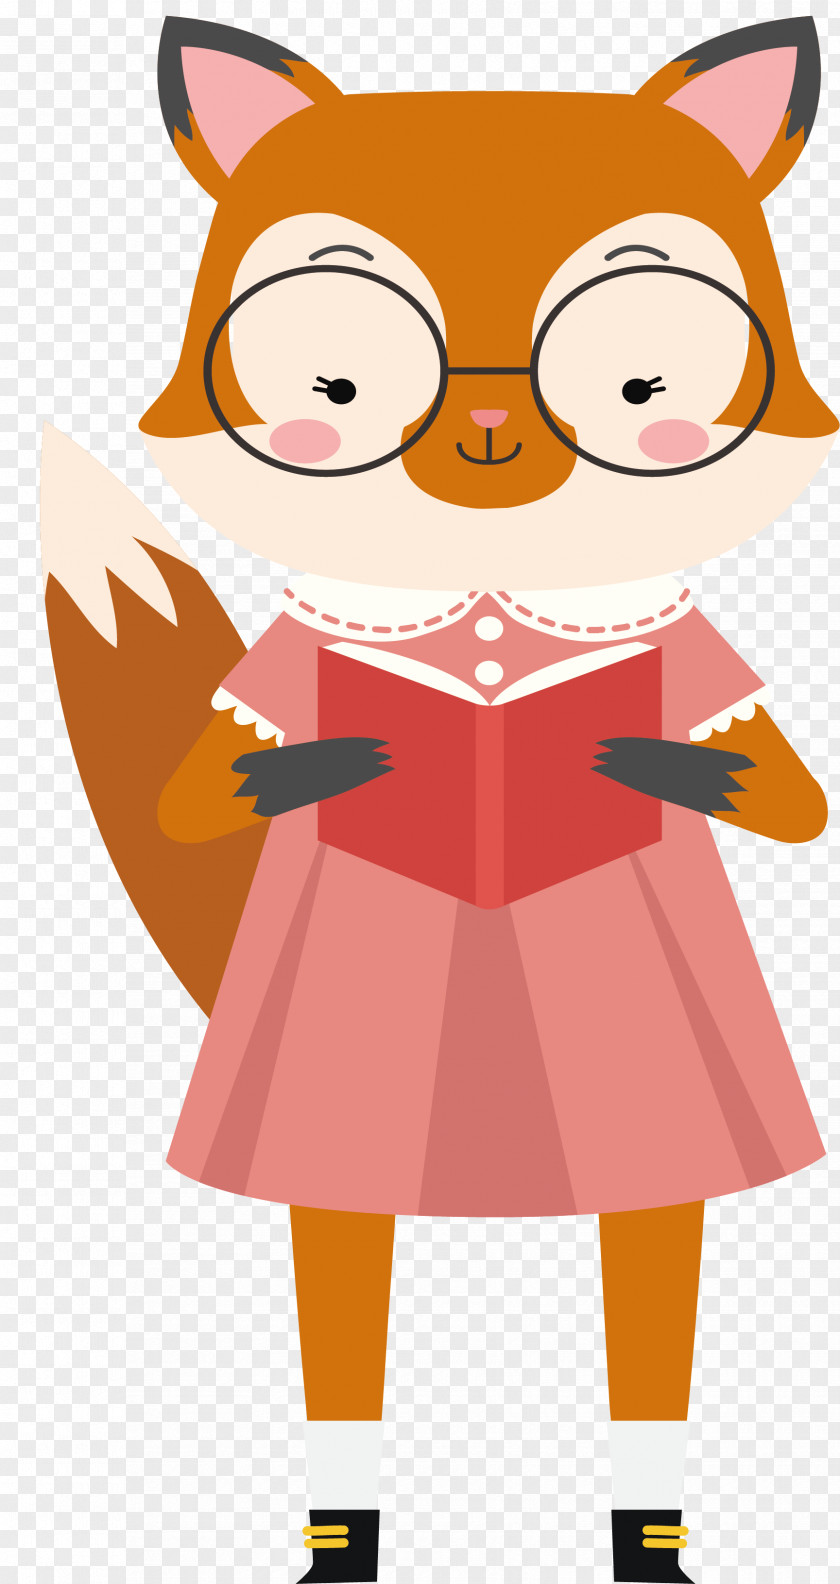 A Little Fox In Skirt Illustration PNG